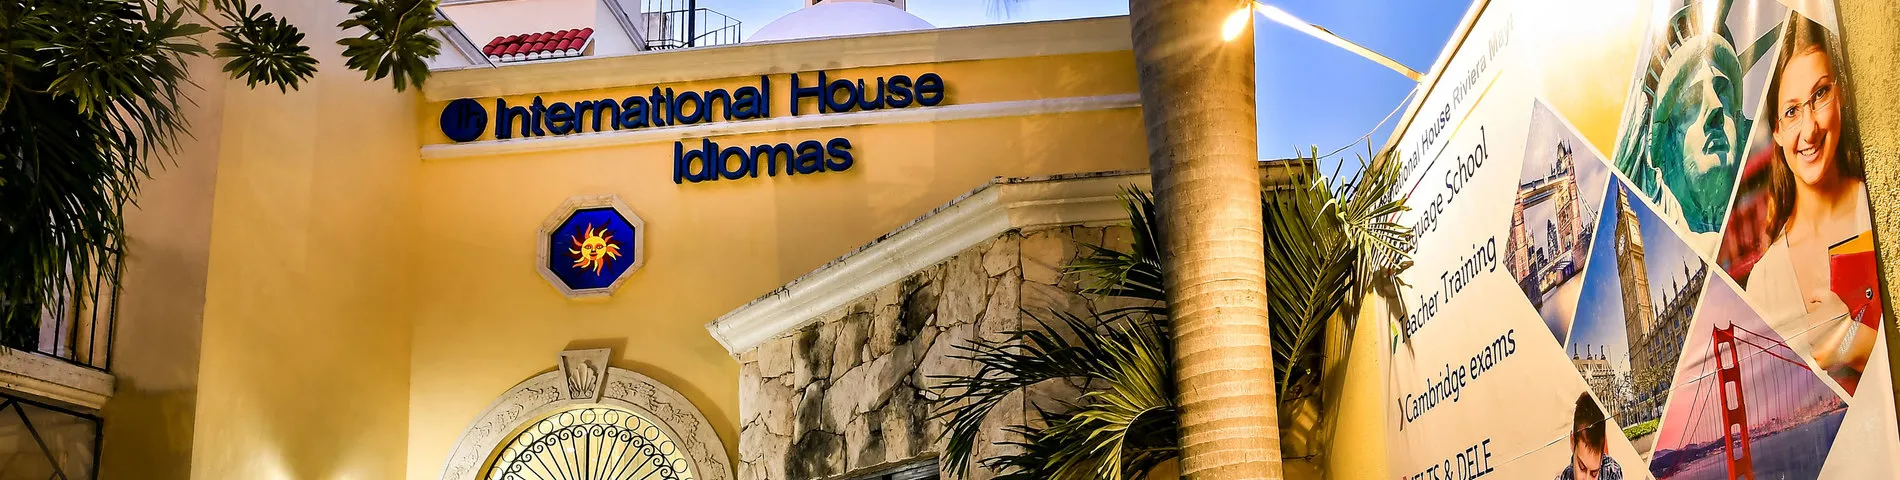 International House - Riviera Maya billede 1